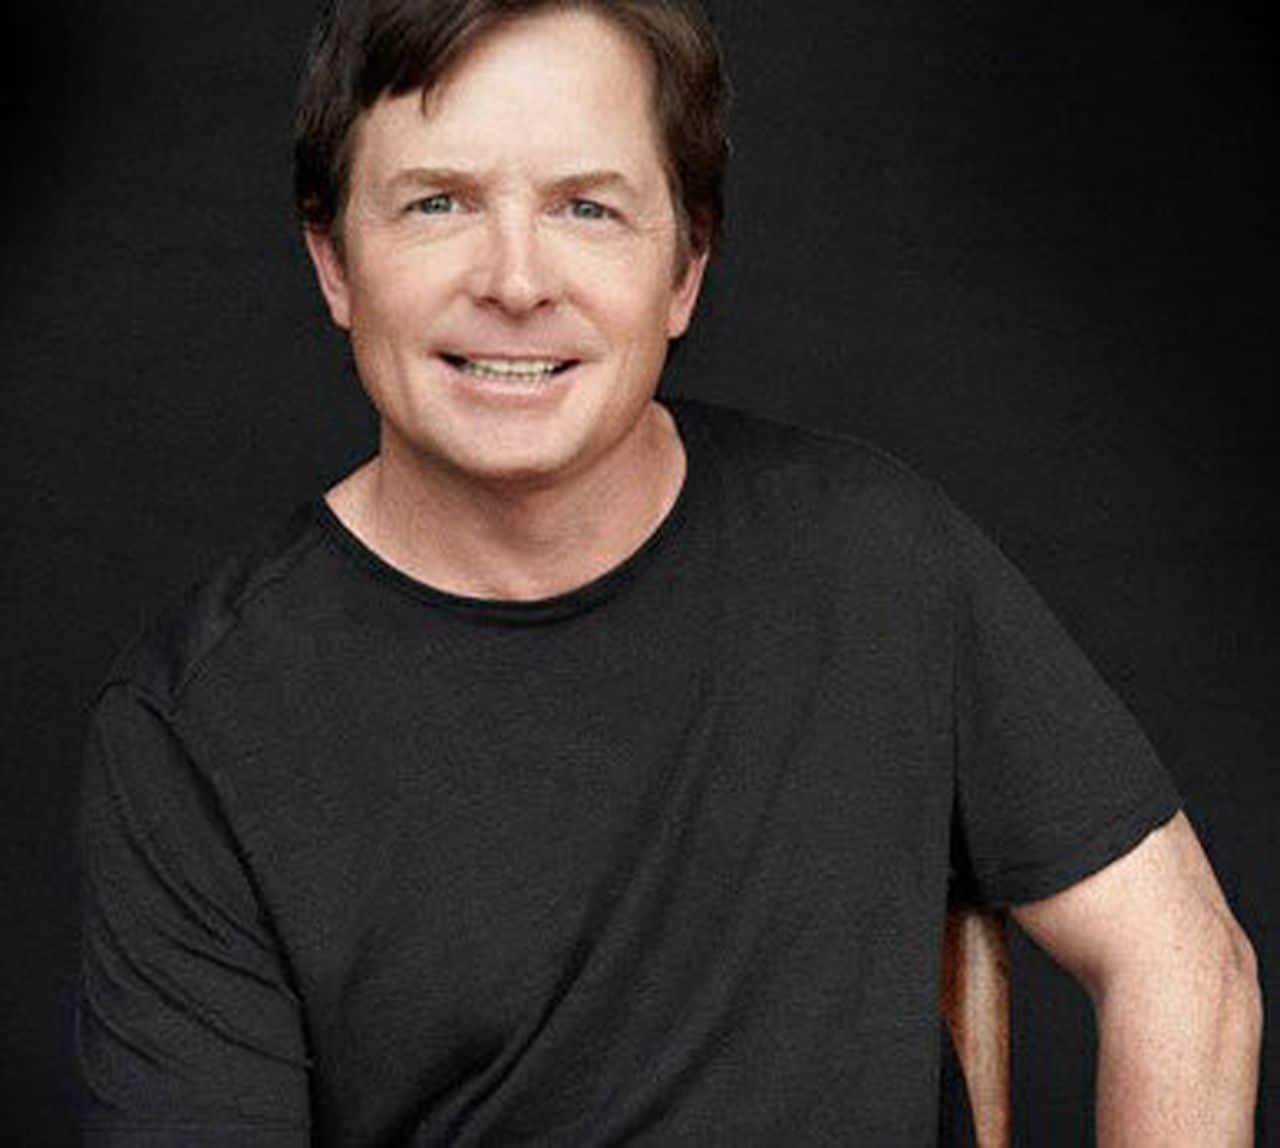 Michael J. Fox foundation awards $400,000 to Grand Rapids researchers ...